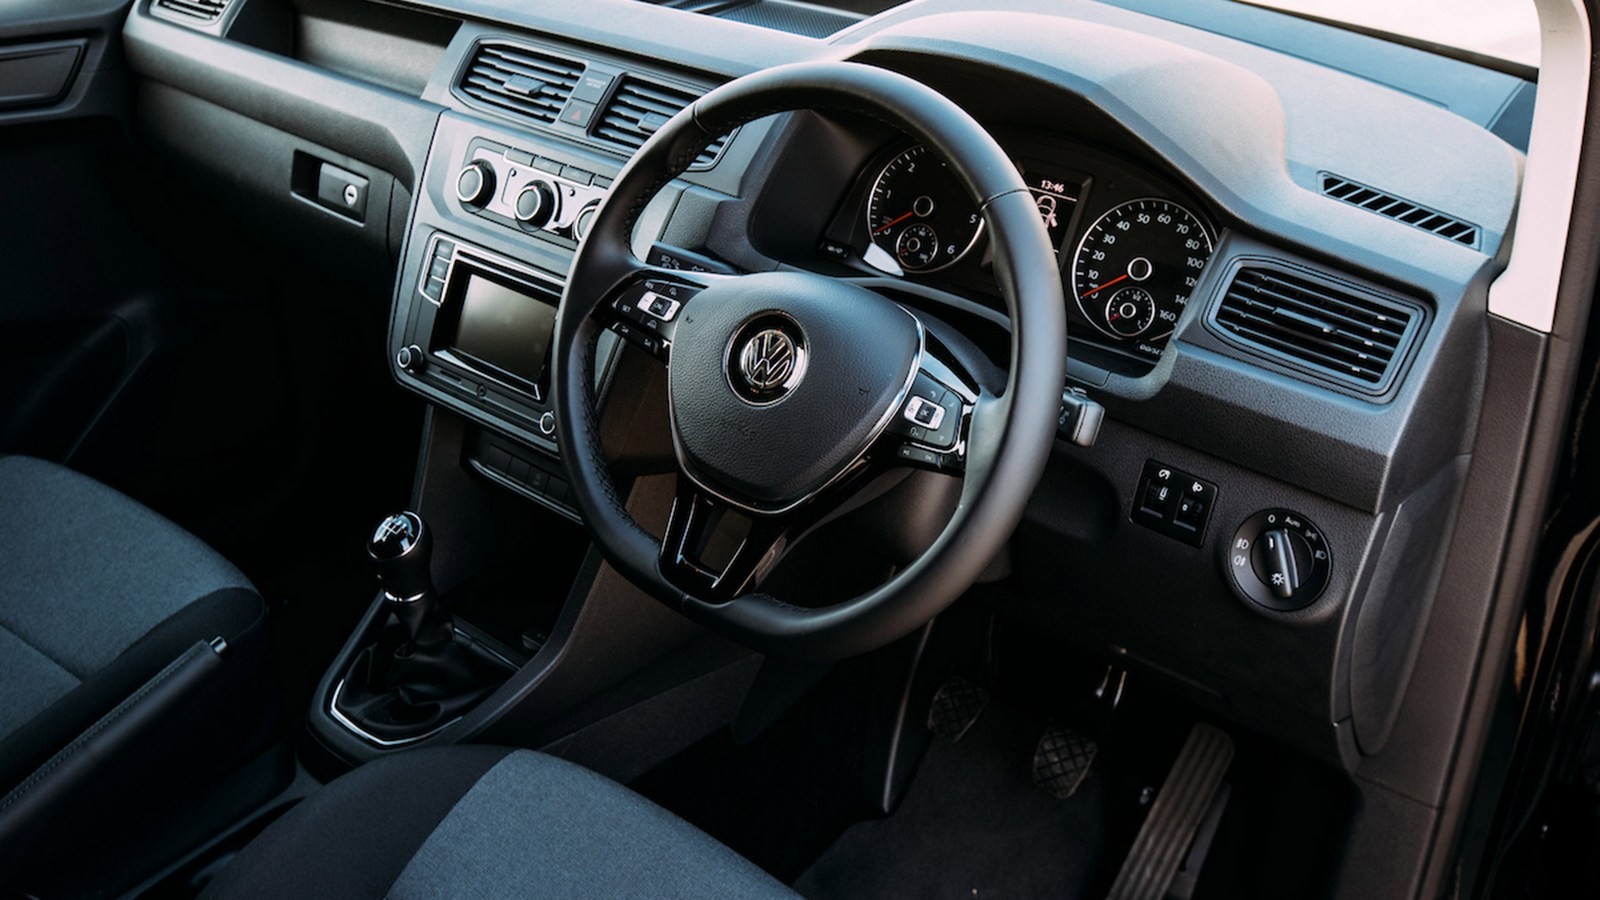 Volkswagen Caddy Black Edition